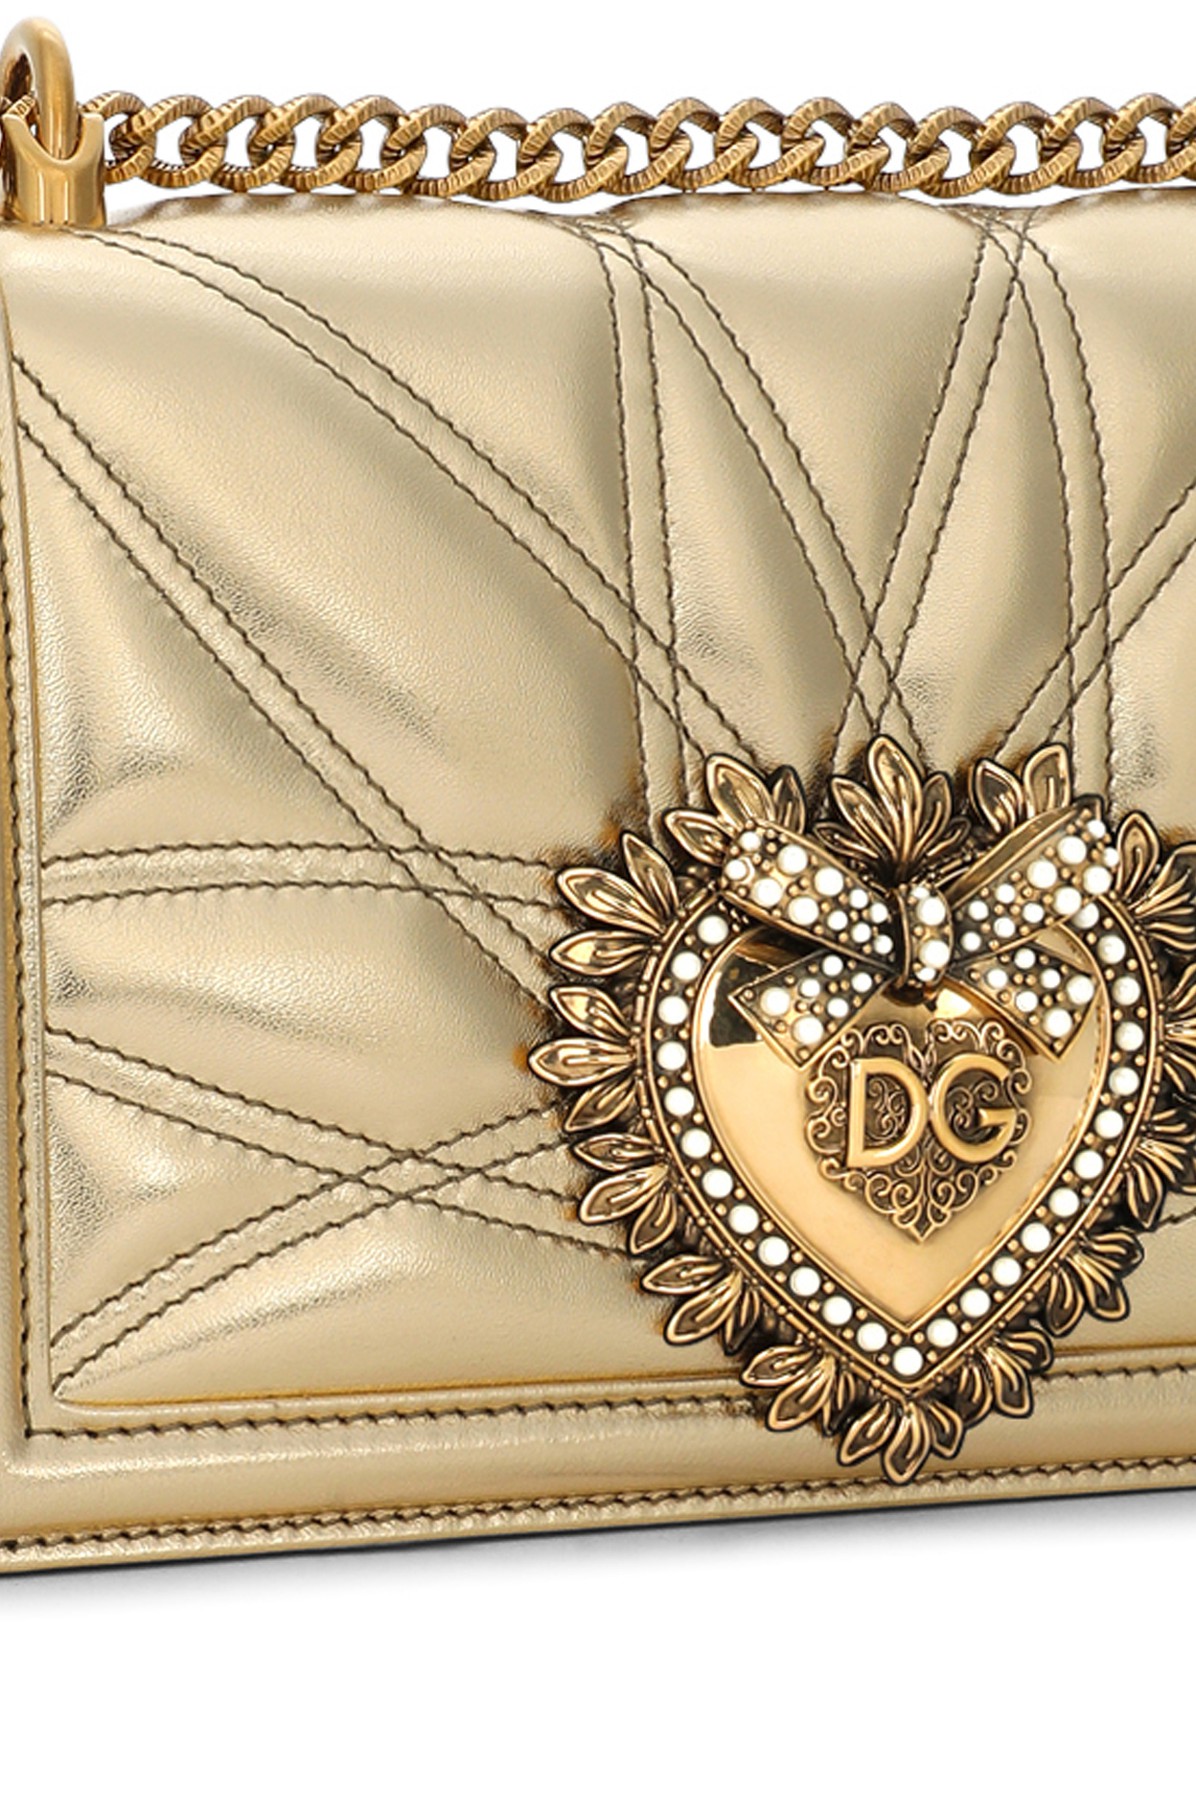 Dolce & Gabbana Medium Devotion Bag in Nappa Leather